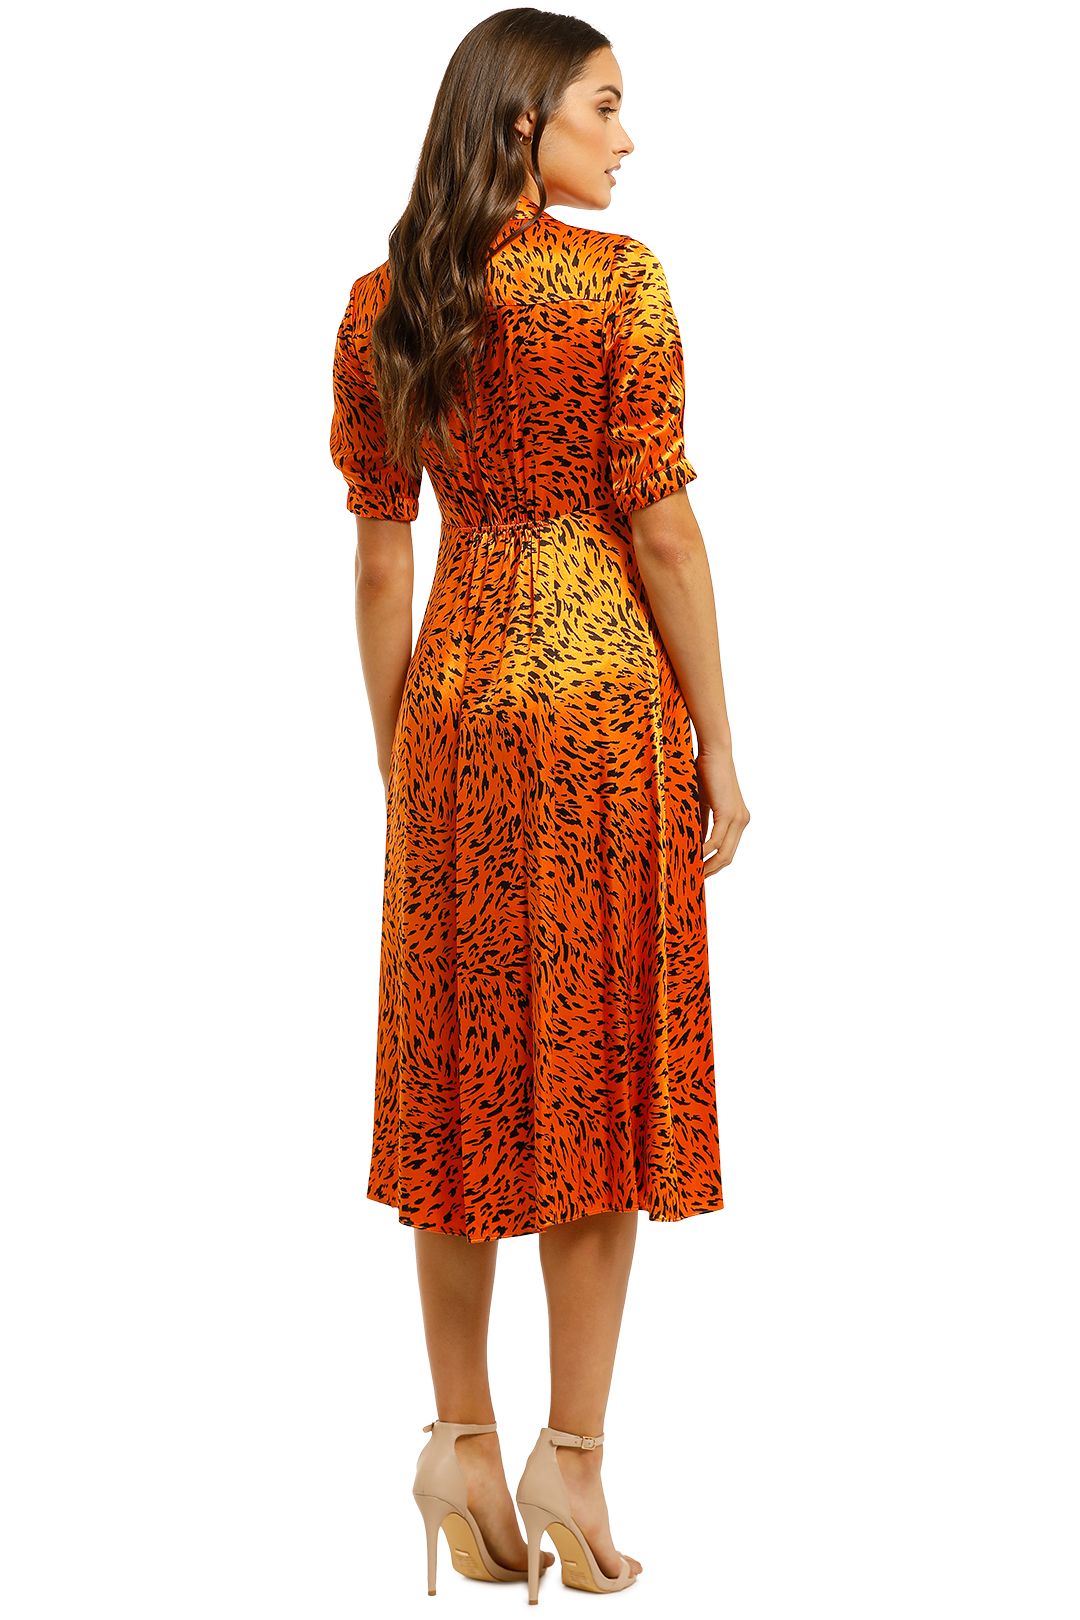 leopard print dress orange